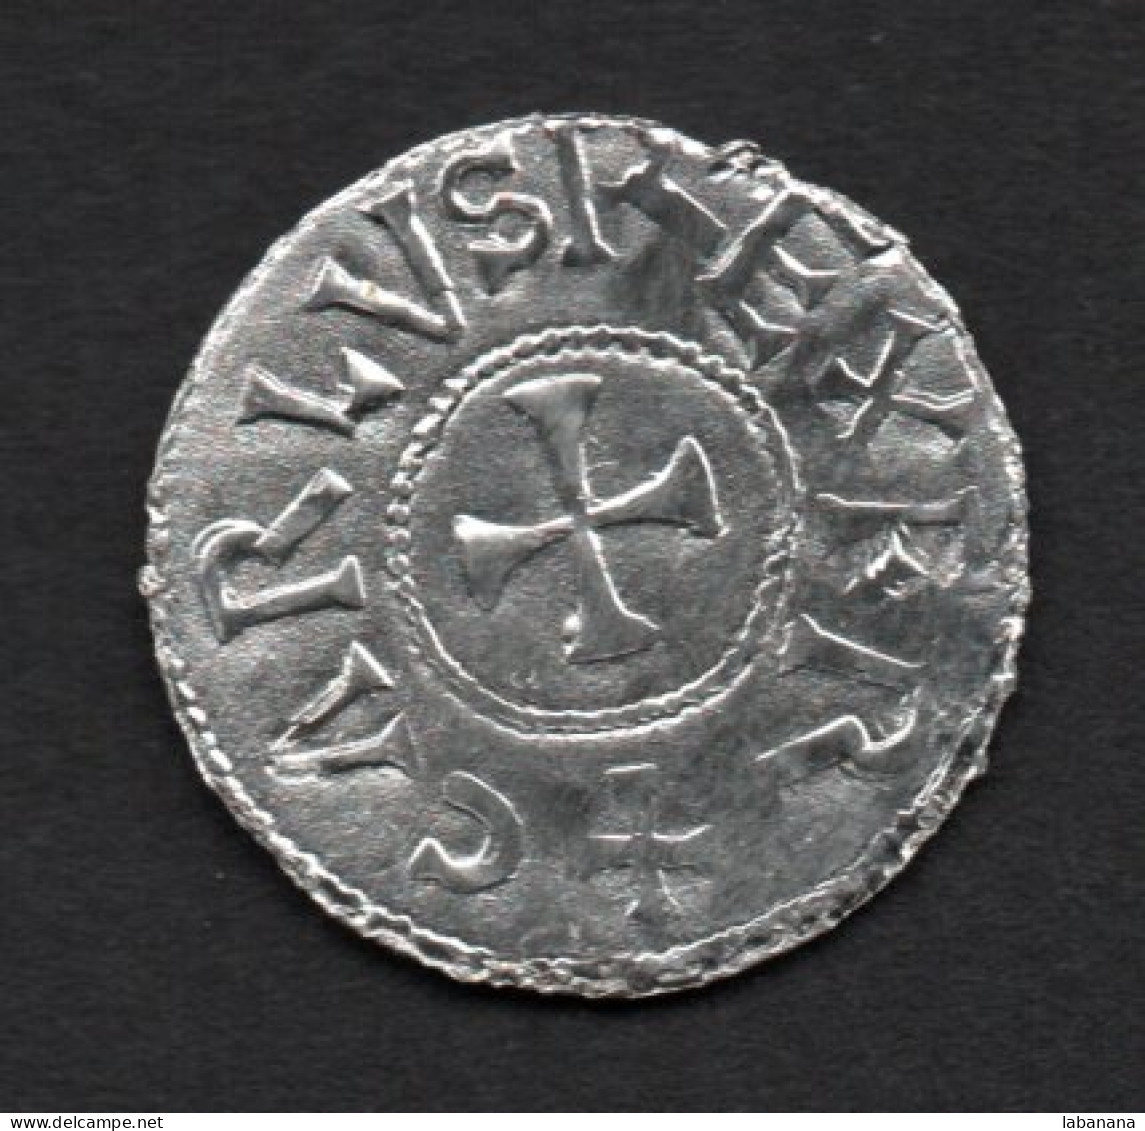 669-France Reproduction Monnaie Charles II Le Chauve Denier N°9 - Imitationen, Nachahmungen